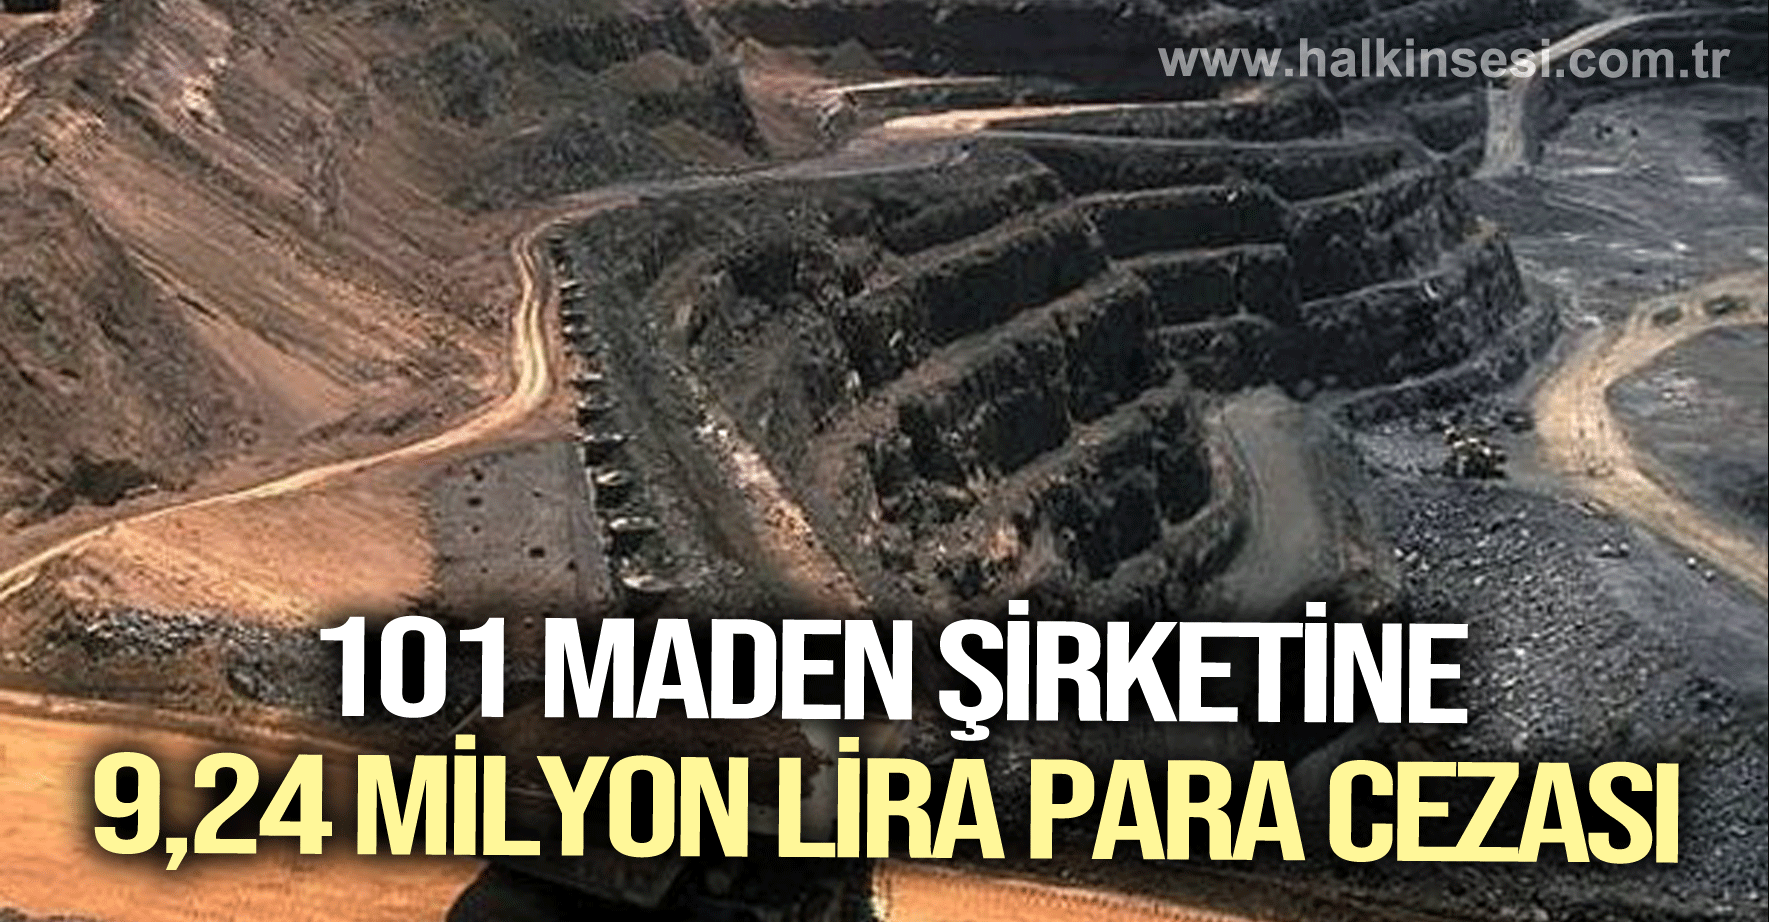 101 maden şirketine 9,24 milyon lira para cezası 